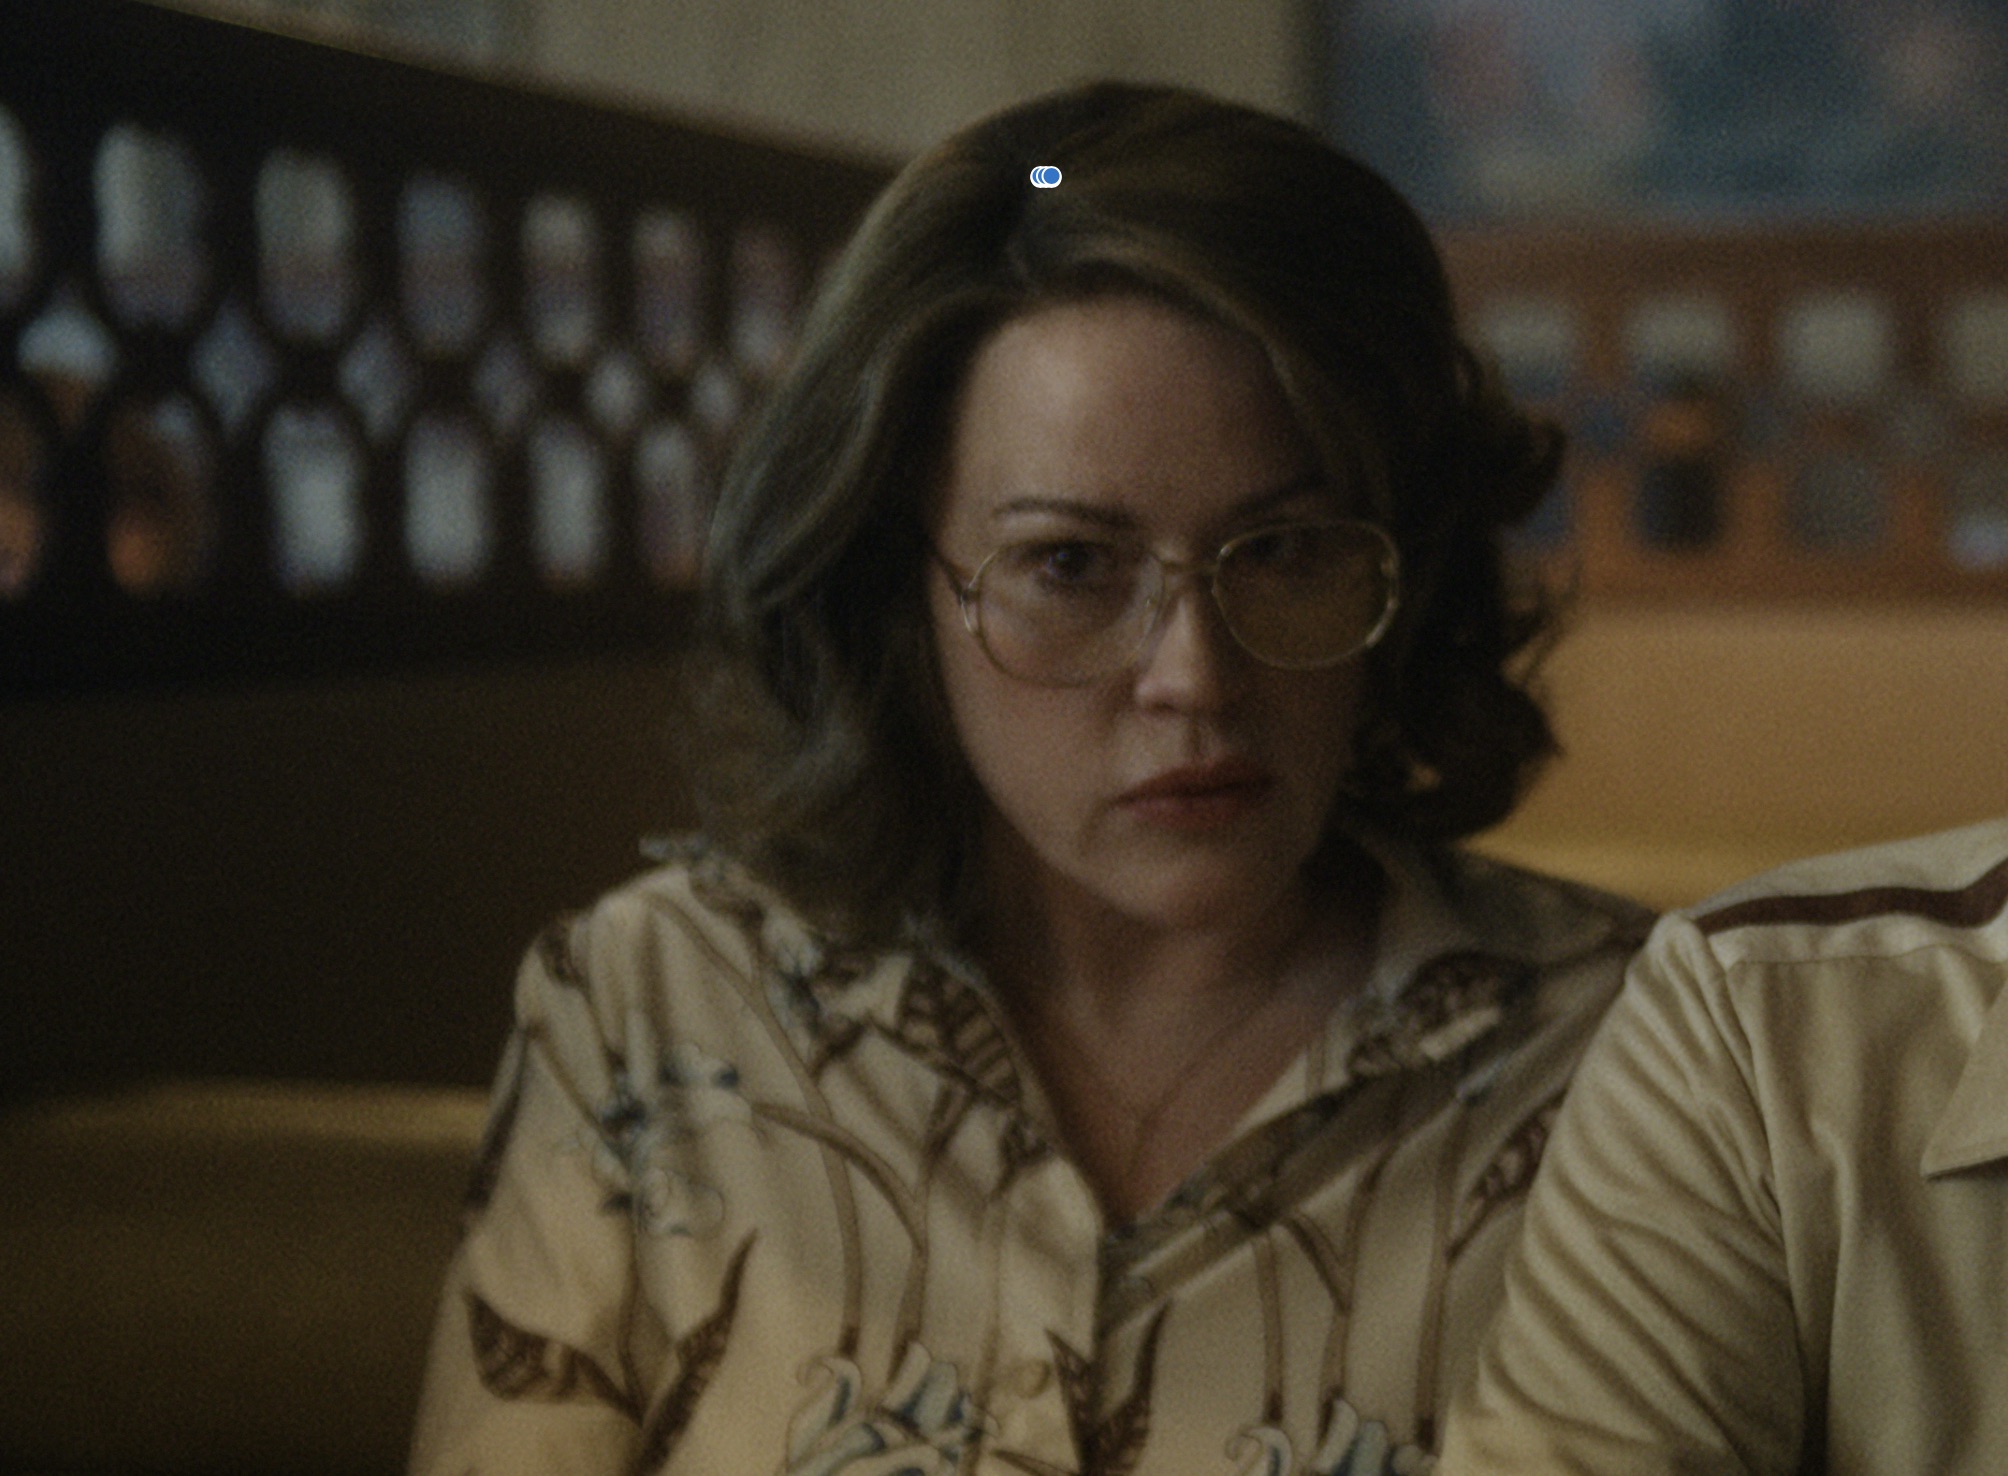 Dahmer – Monster: The Jeffrey Dahmer Story Cast on Netflix - Molly Ringwald as Shari Dahmer